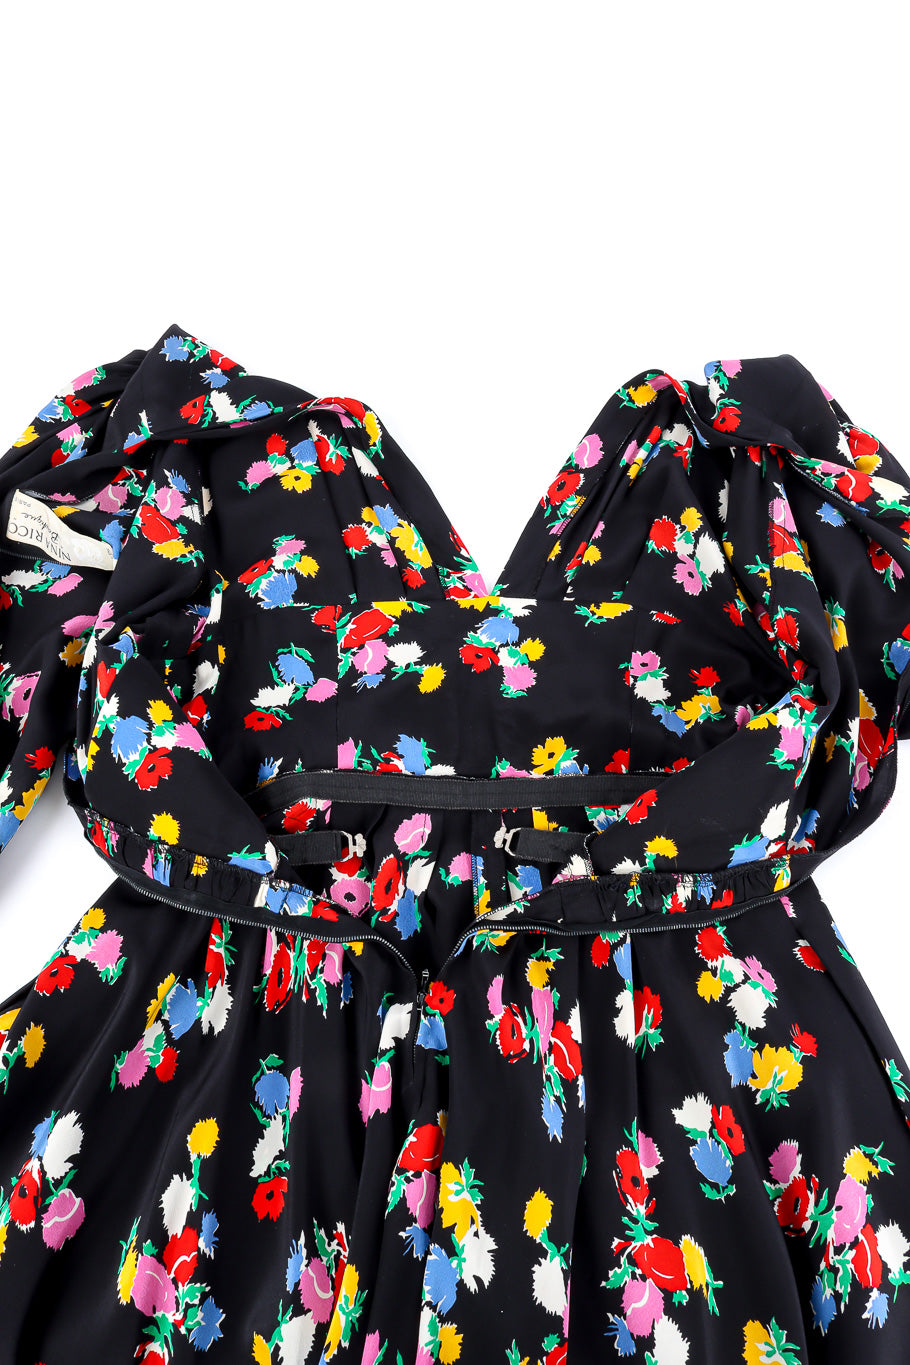 Nina Ricci silk floral print dress back zipper detail @recessla